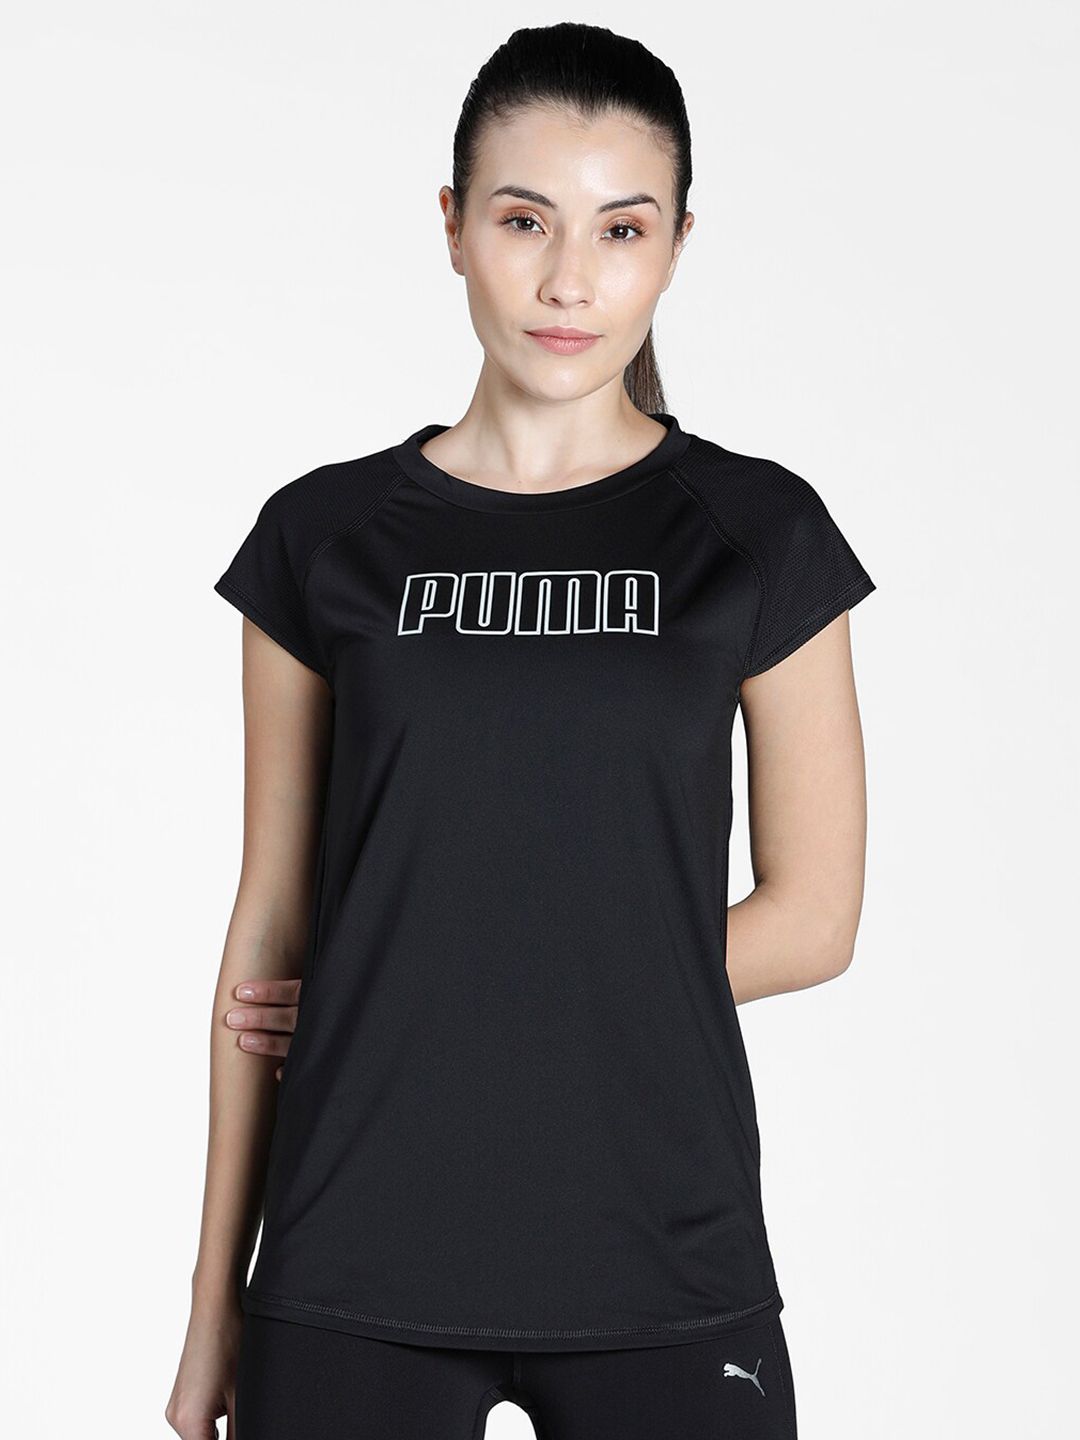 Puma Women Black & White Brand Logo Printed T-shirt Price in India